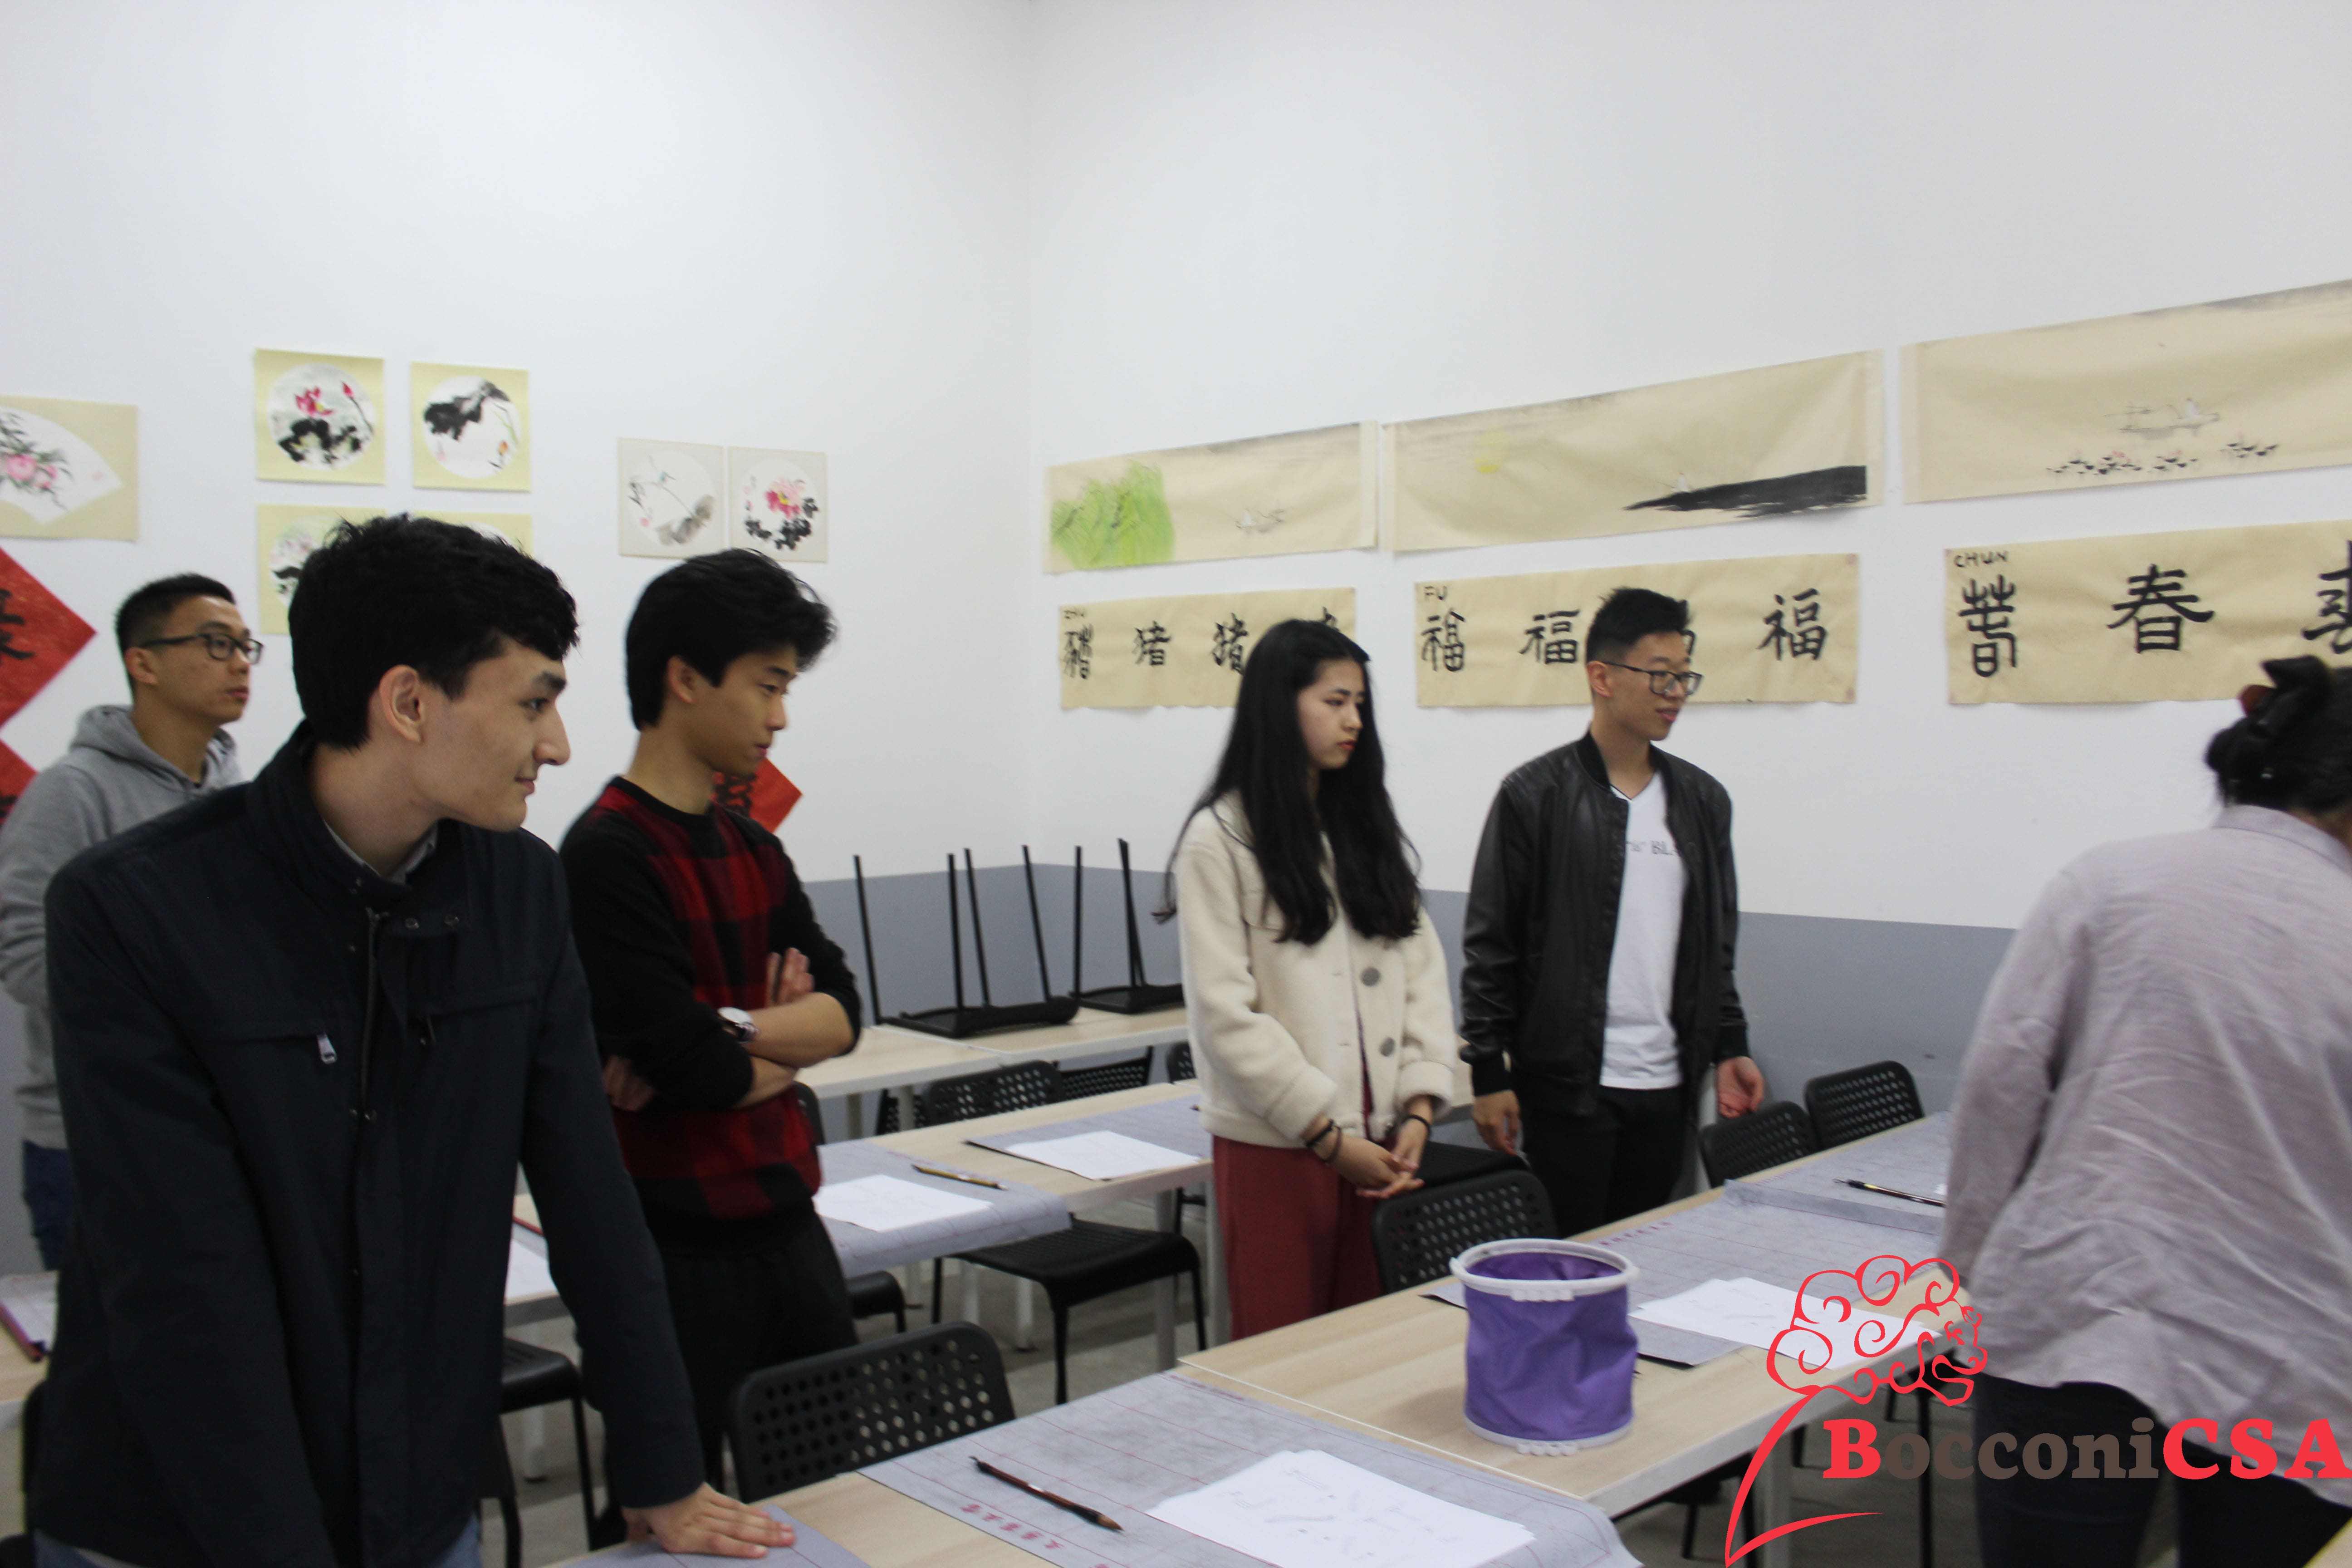 Bocconi Chinese Student Association